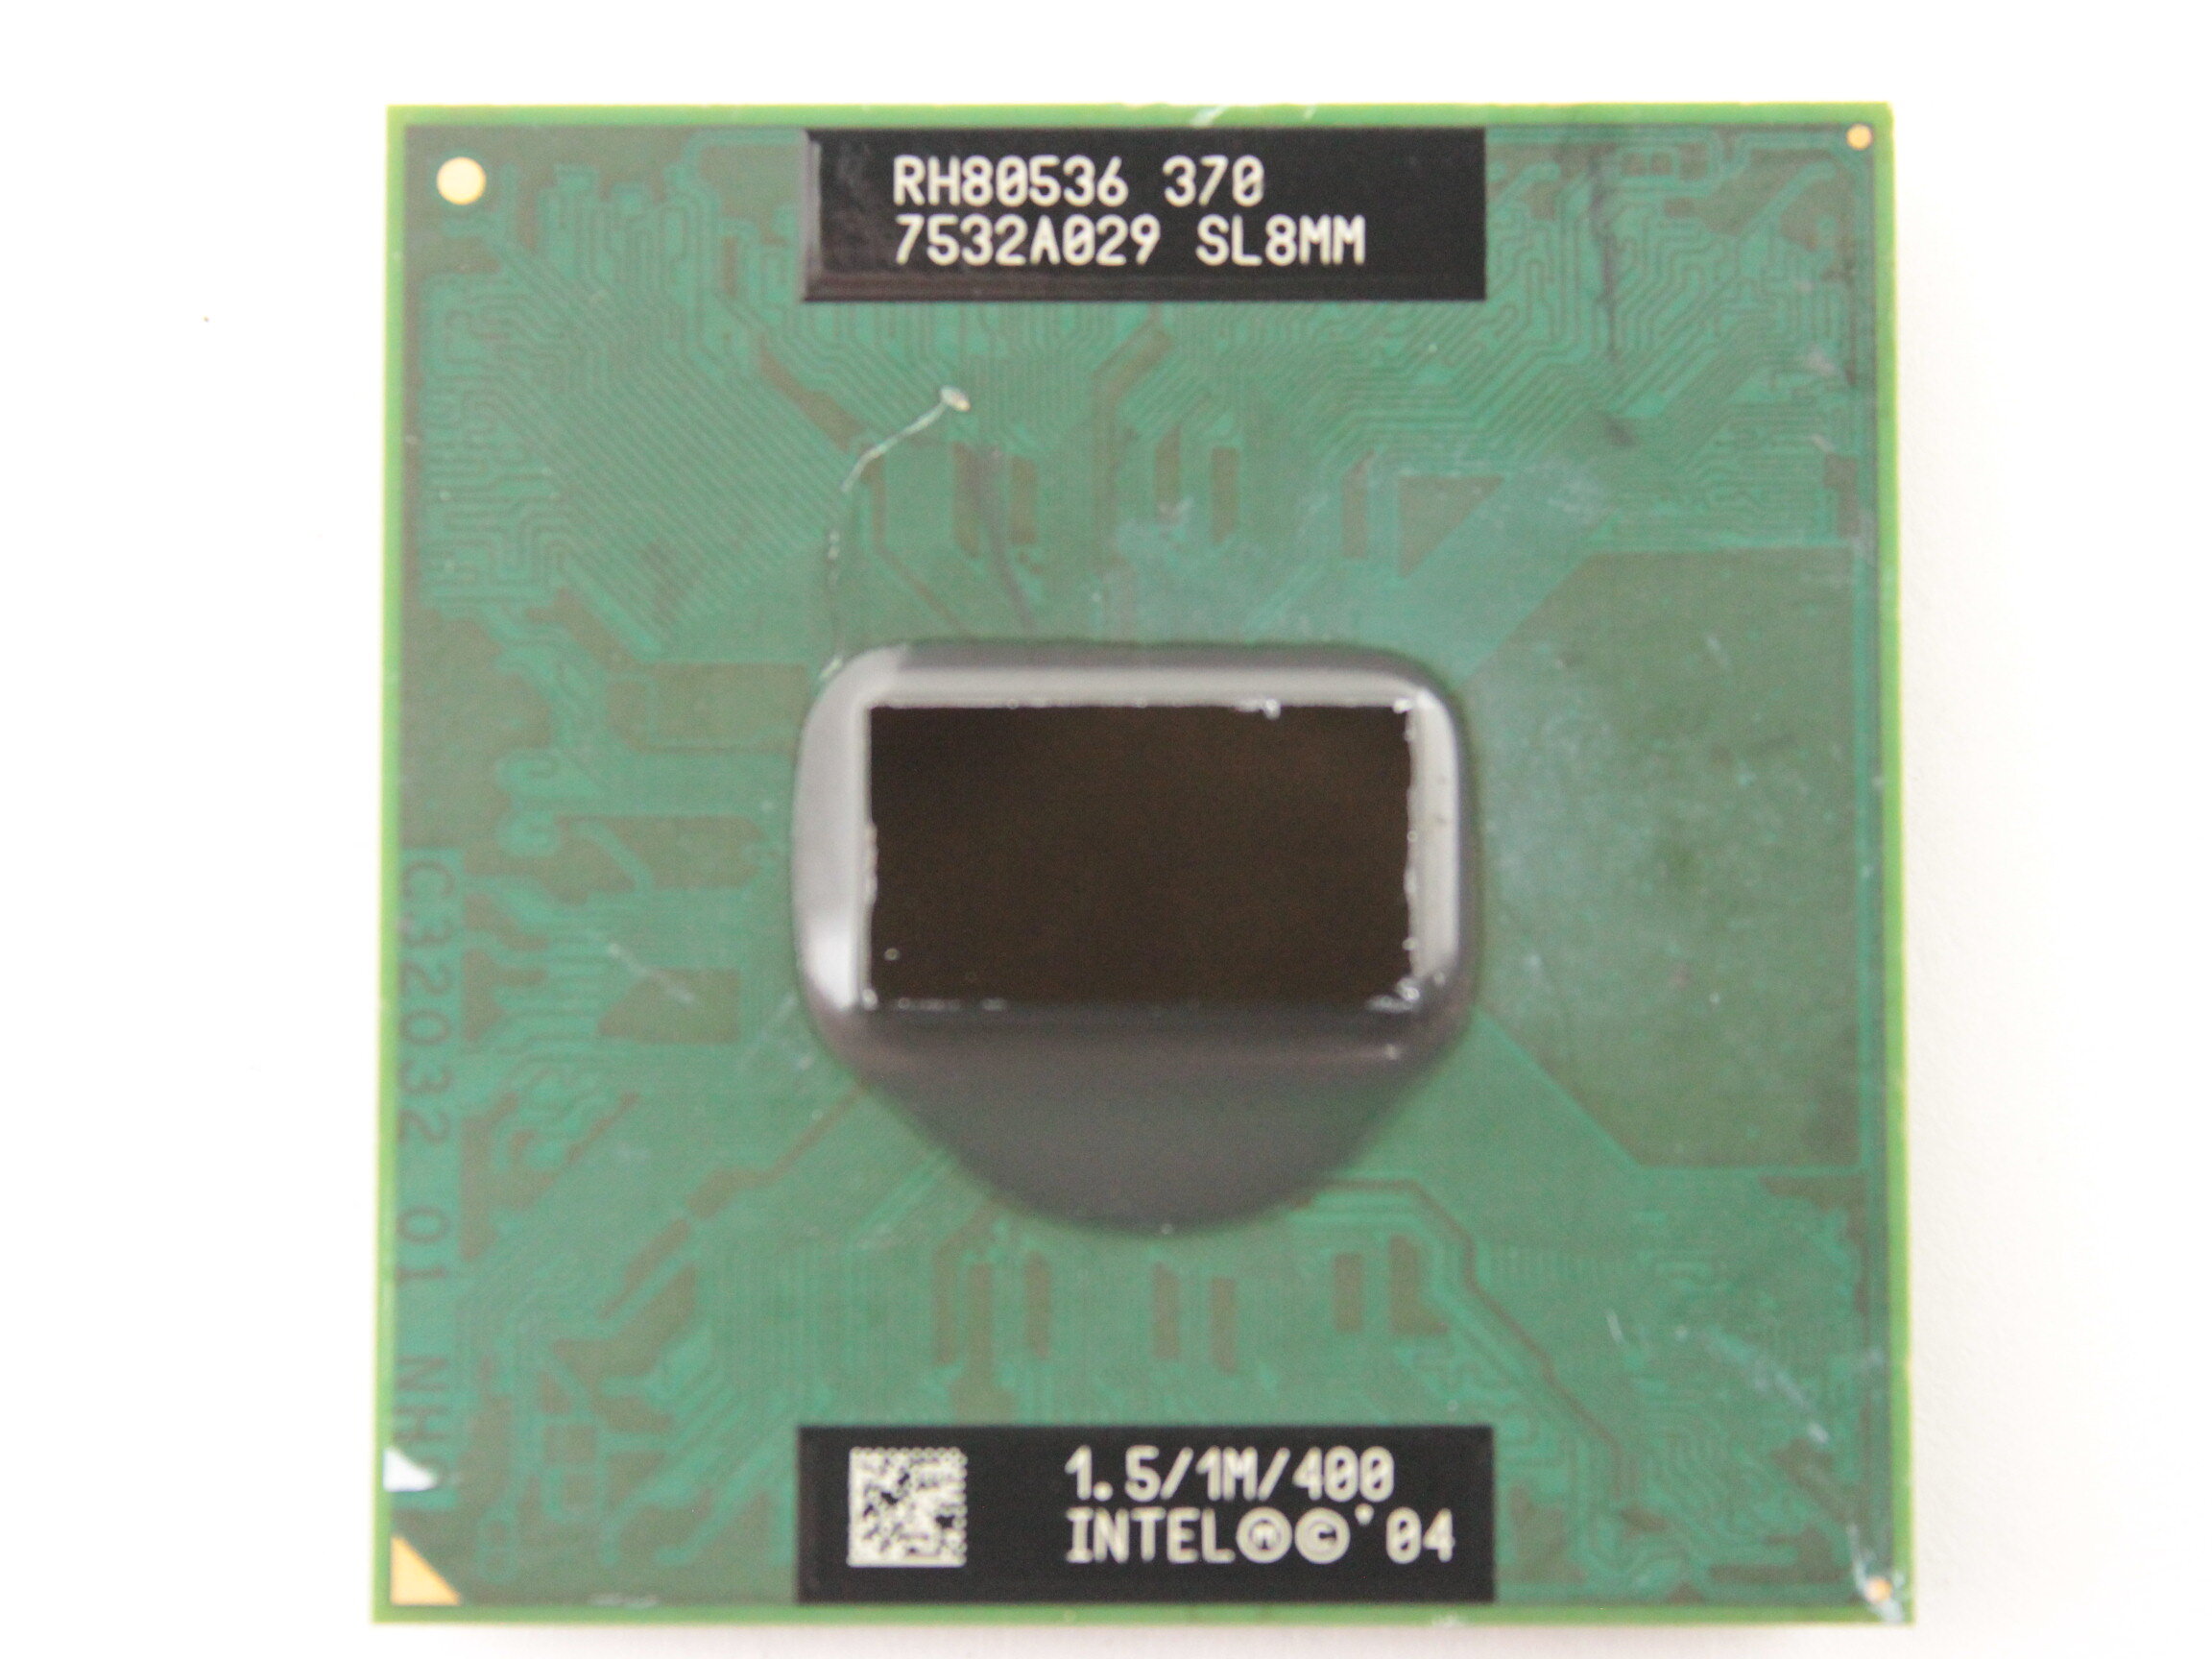 Процессор для ноутбука Intel Celeron M370 (1M Cache 1.50 GHz 400 MHz) [SL8MM]